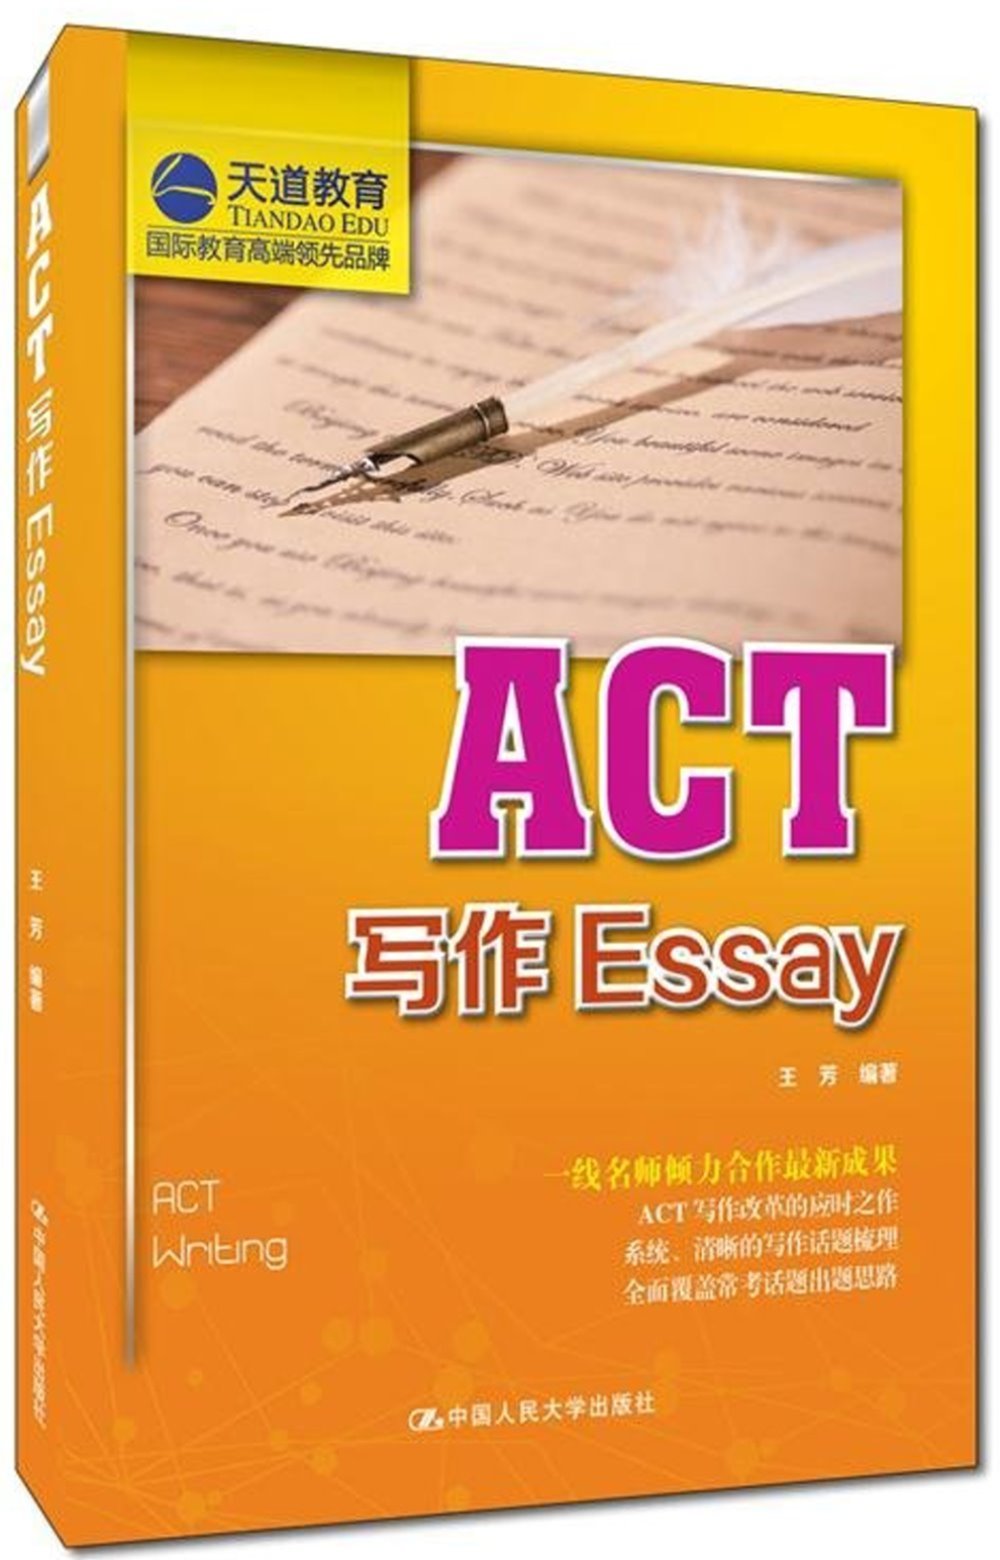 ACT寫作Essay